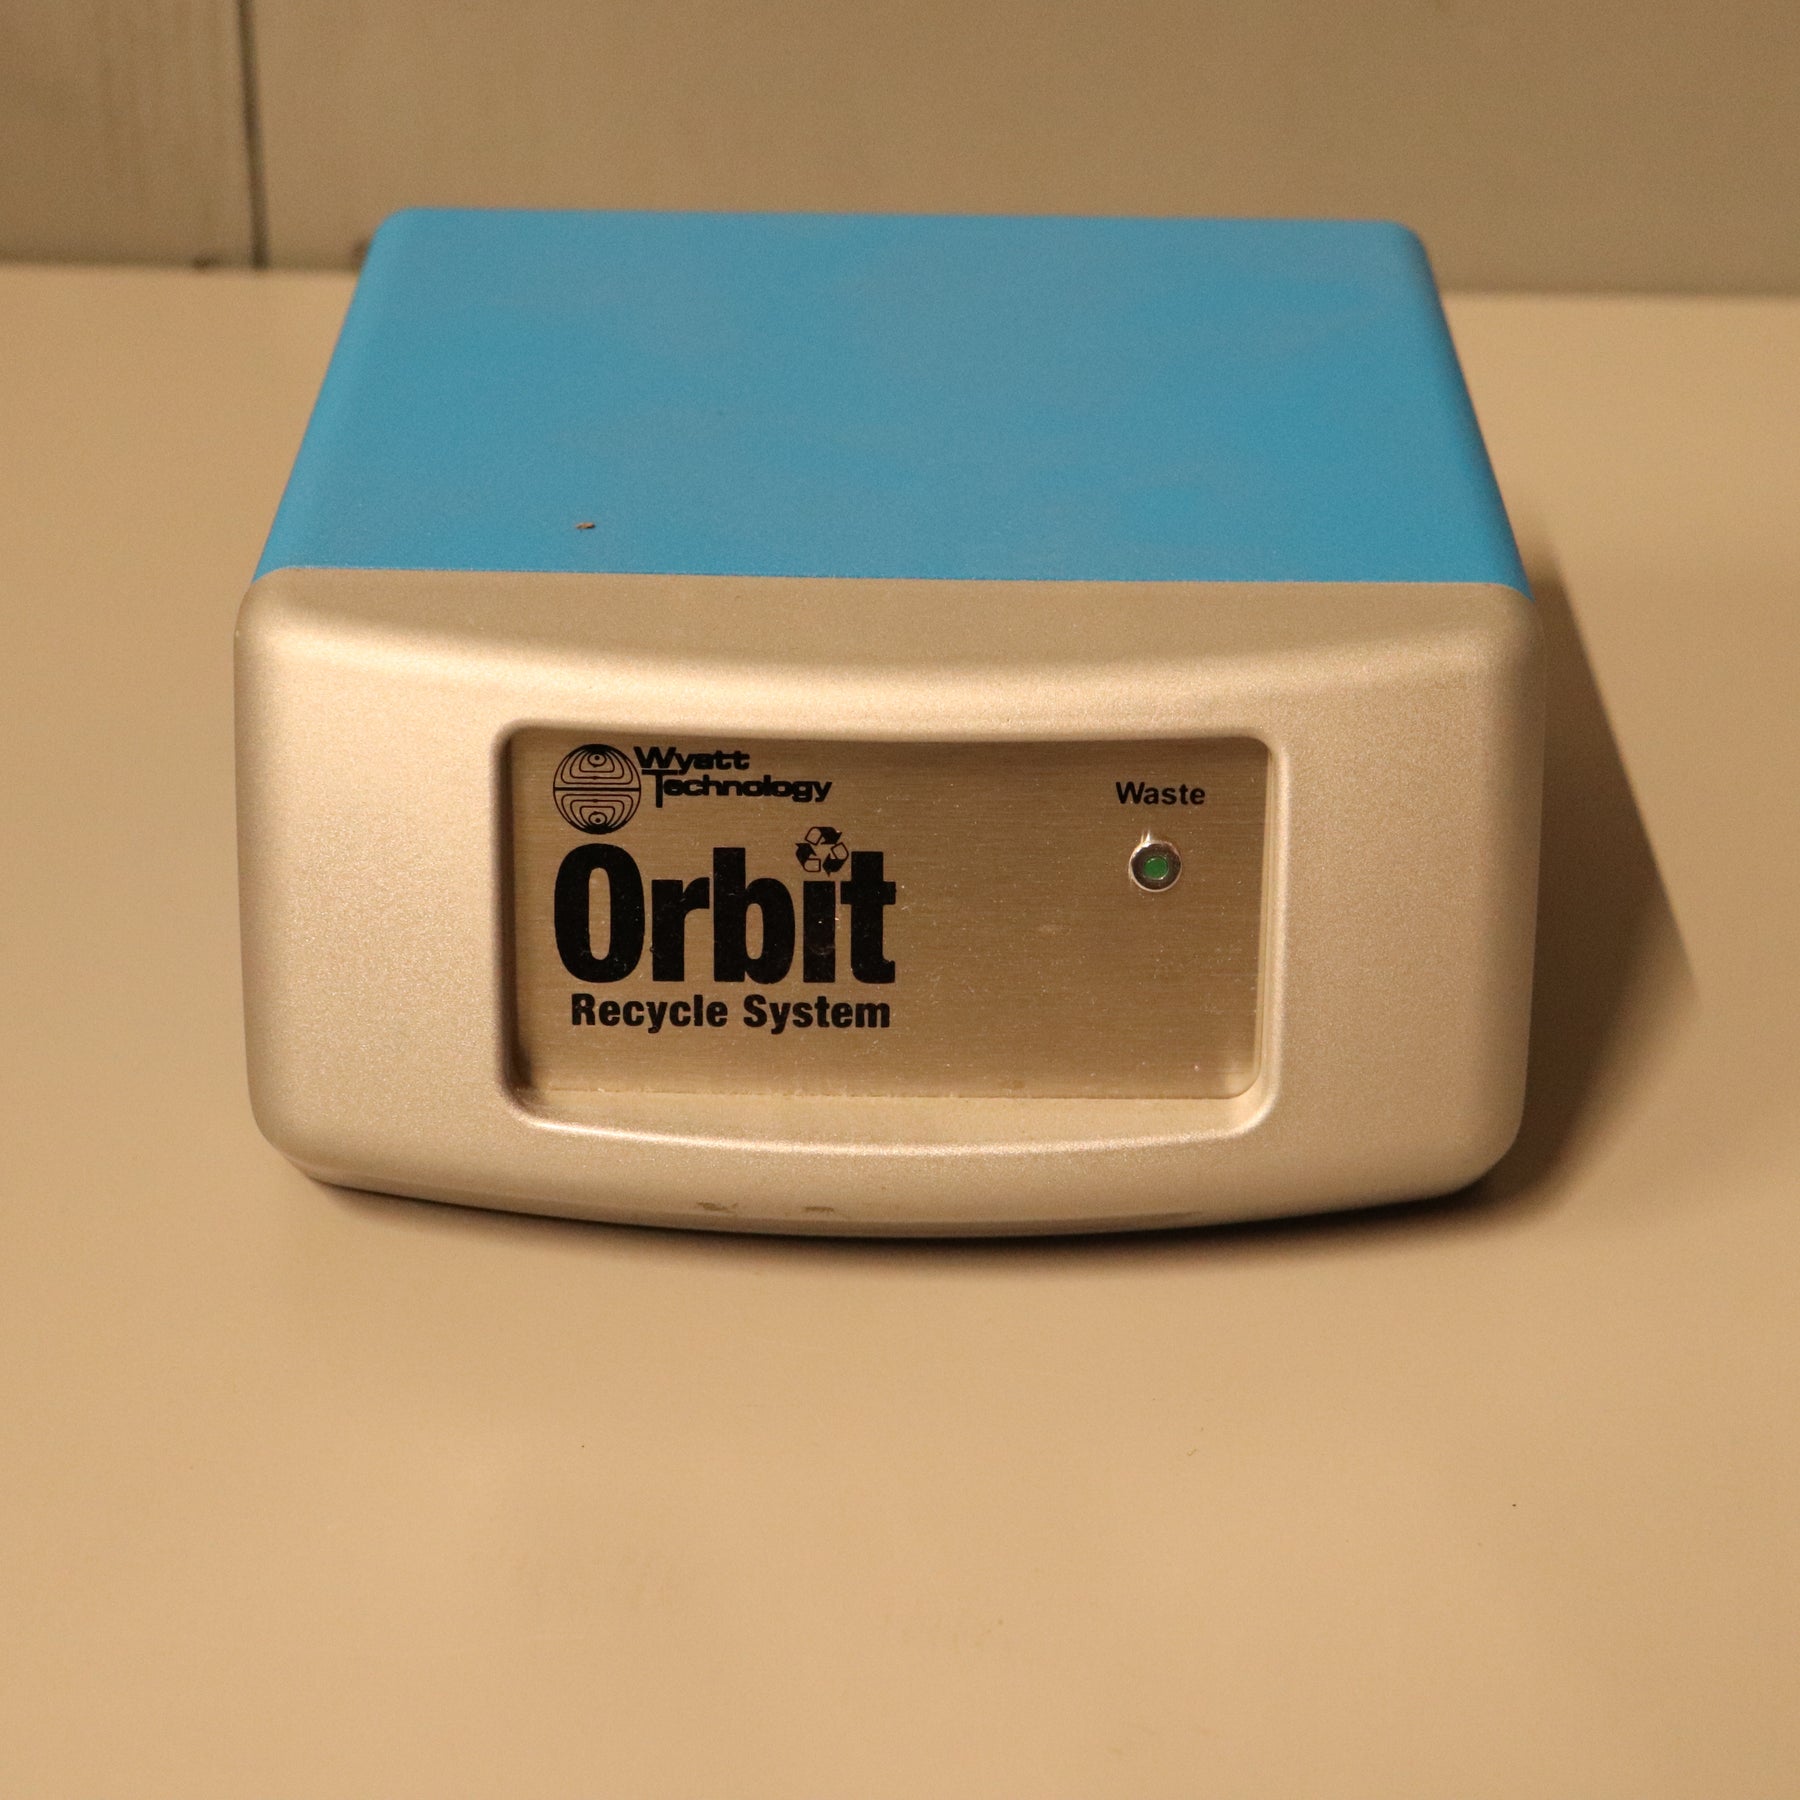 Wyatt Technology Orbit Recycle System WORB-02